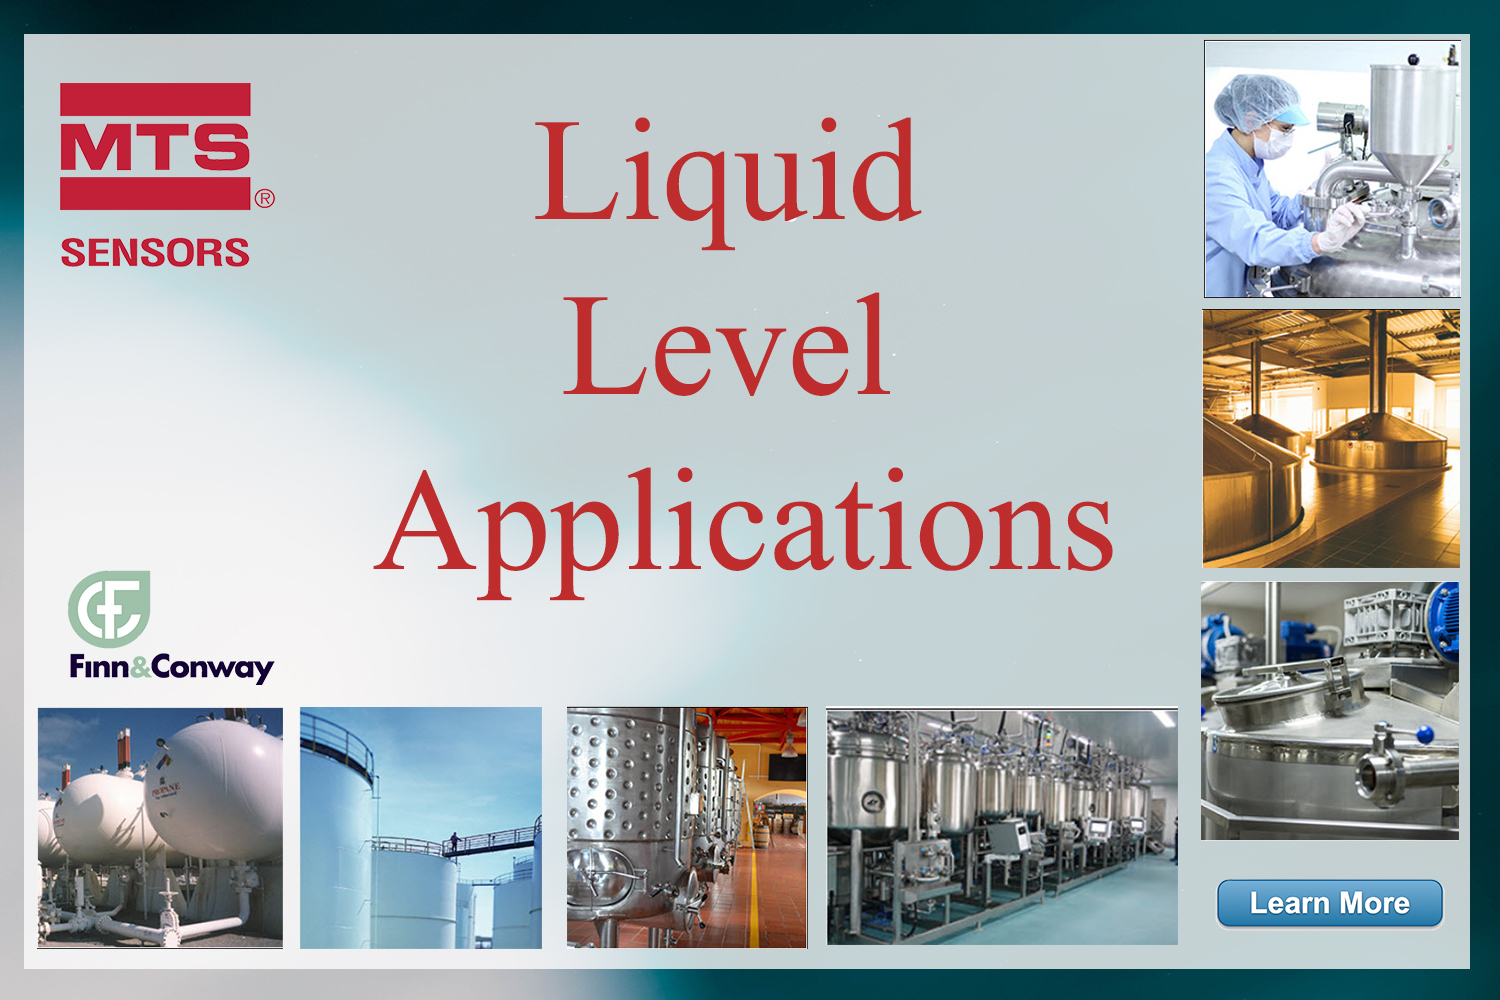 Liquid Level Solutions by Temposonics